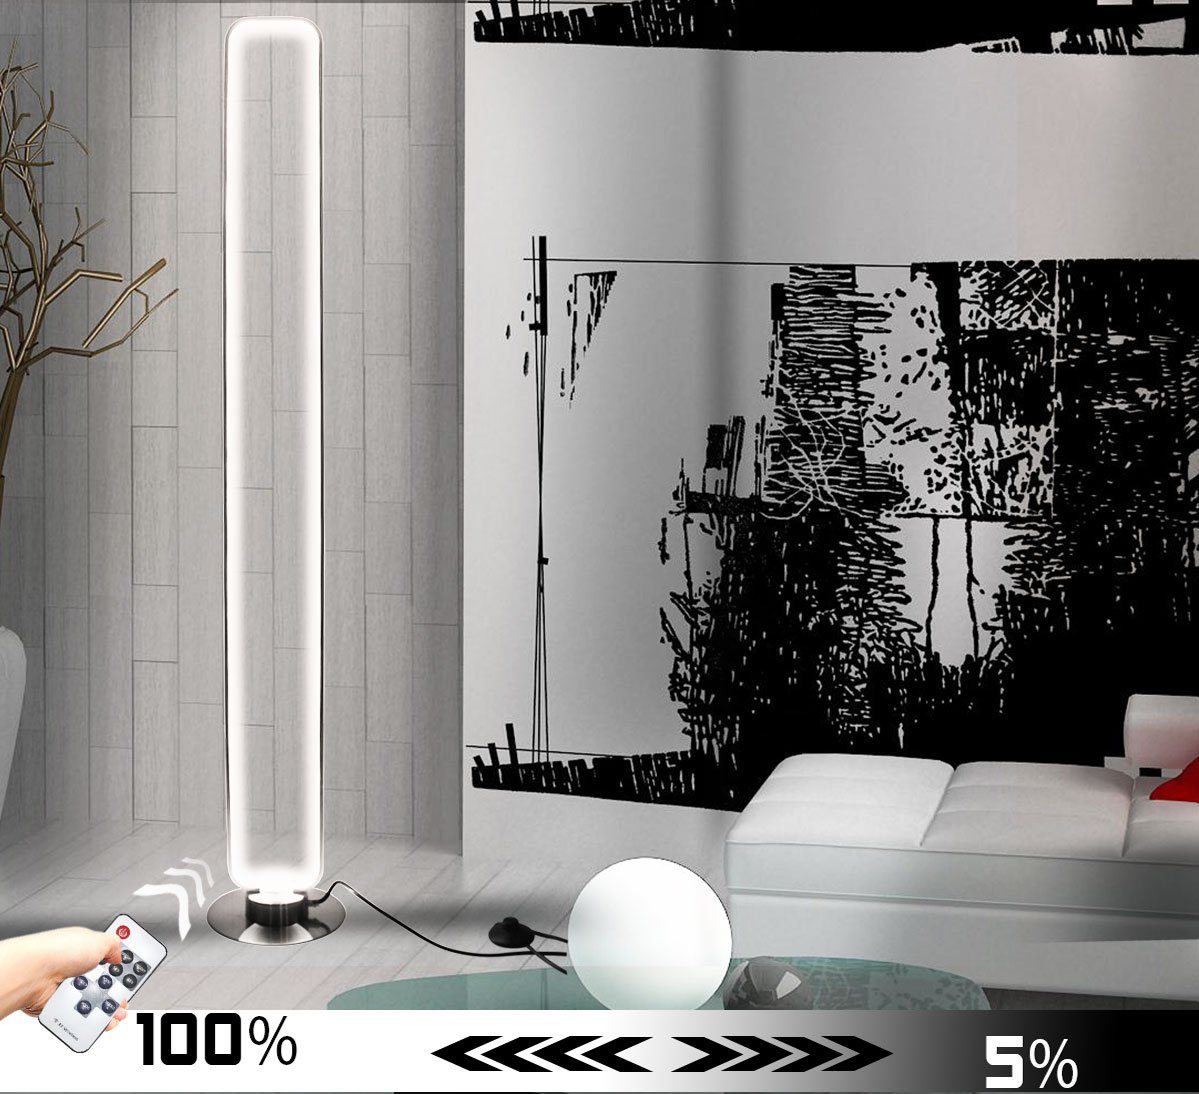 Lewima LED Stehlampe, Dimmbar Warmweiß 140cm LED Stehleuchte Standlampe  Standleuchte Bodenlampe, 50W mit Fernbedienung online kaufen | OTTO